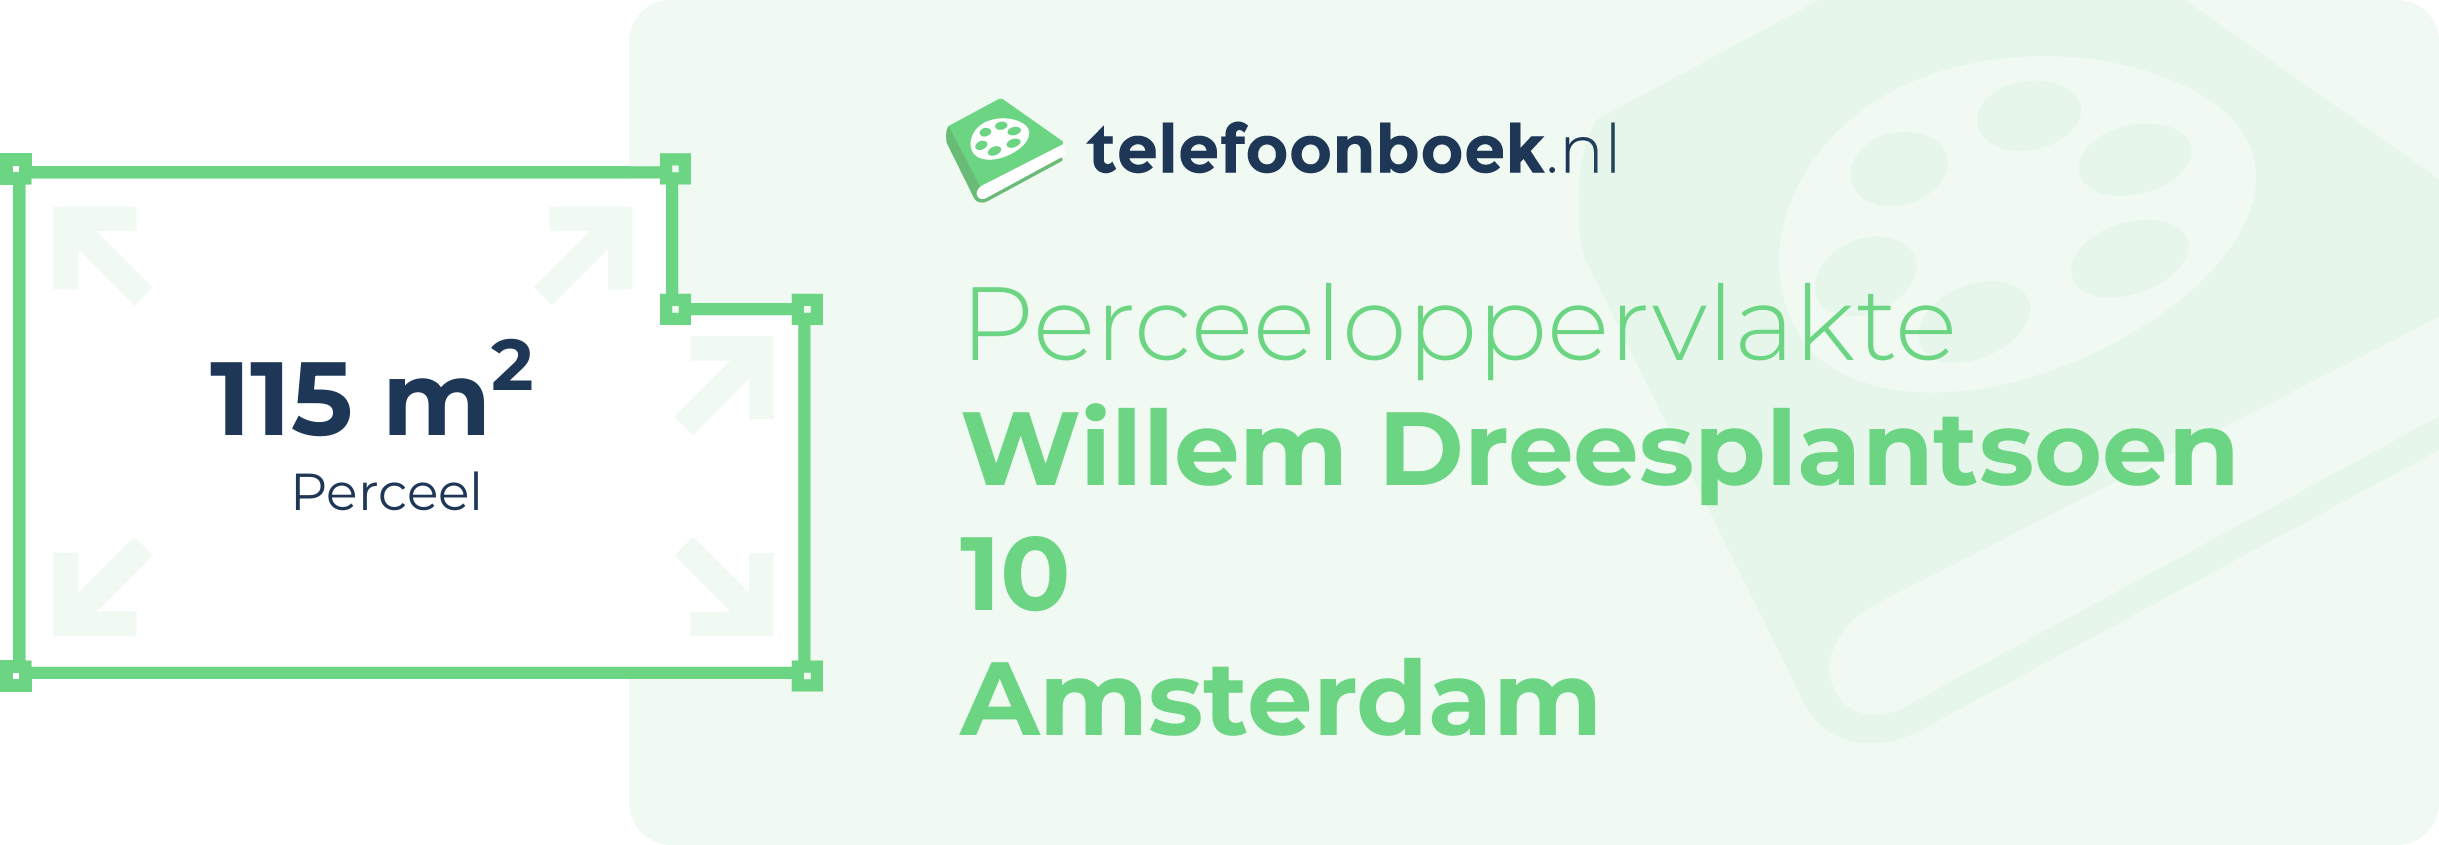 Perceeloppervlakte Willem Dreesplantsoen 10 Amsterdam